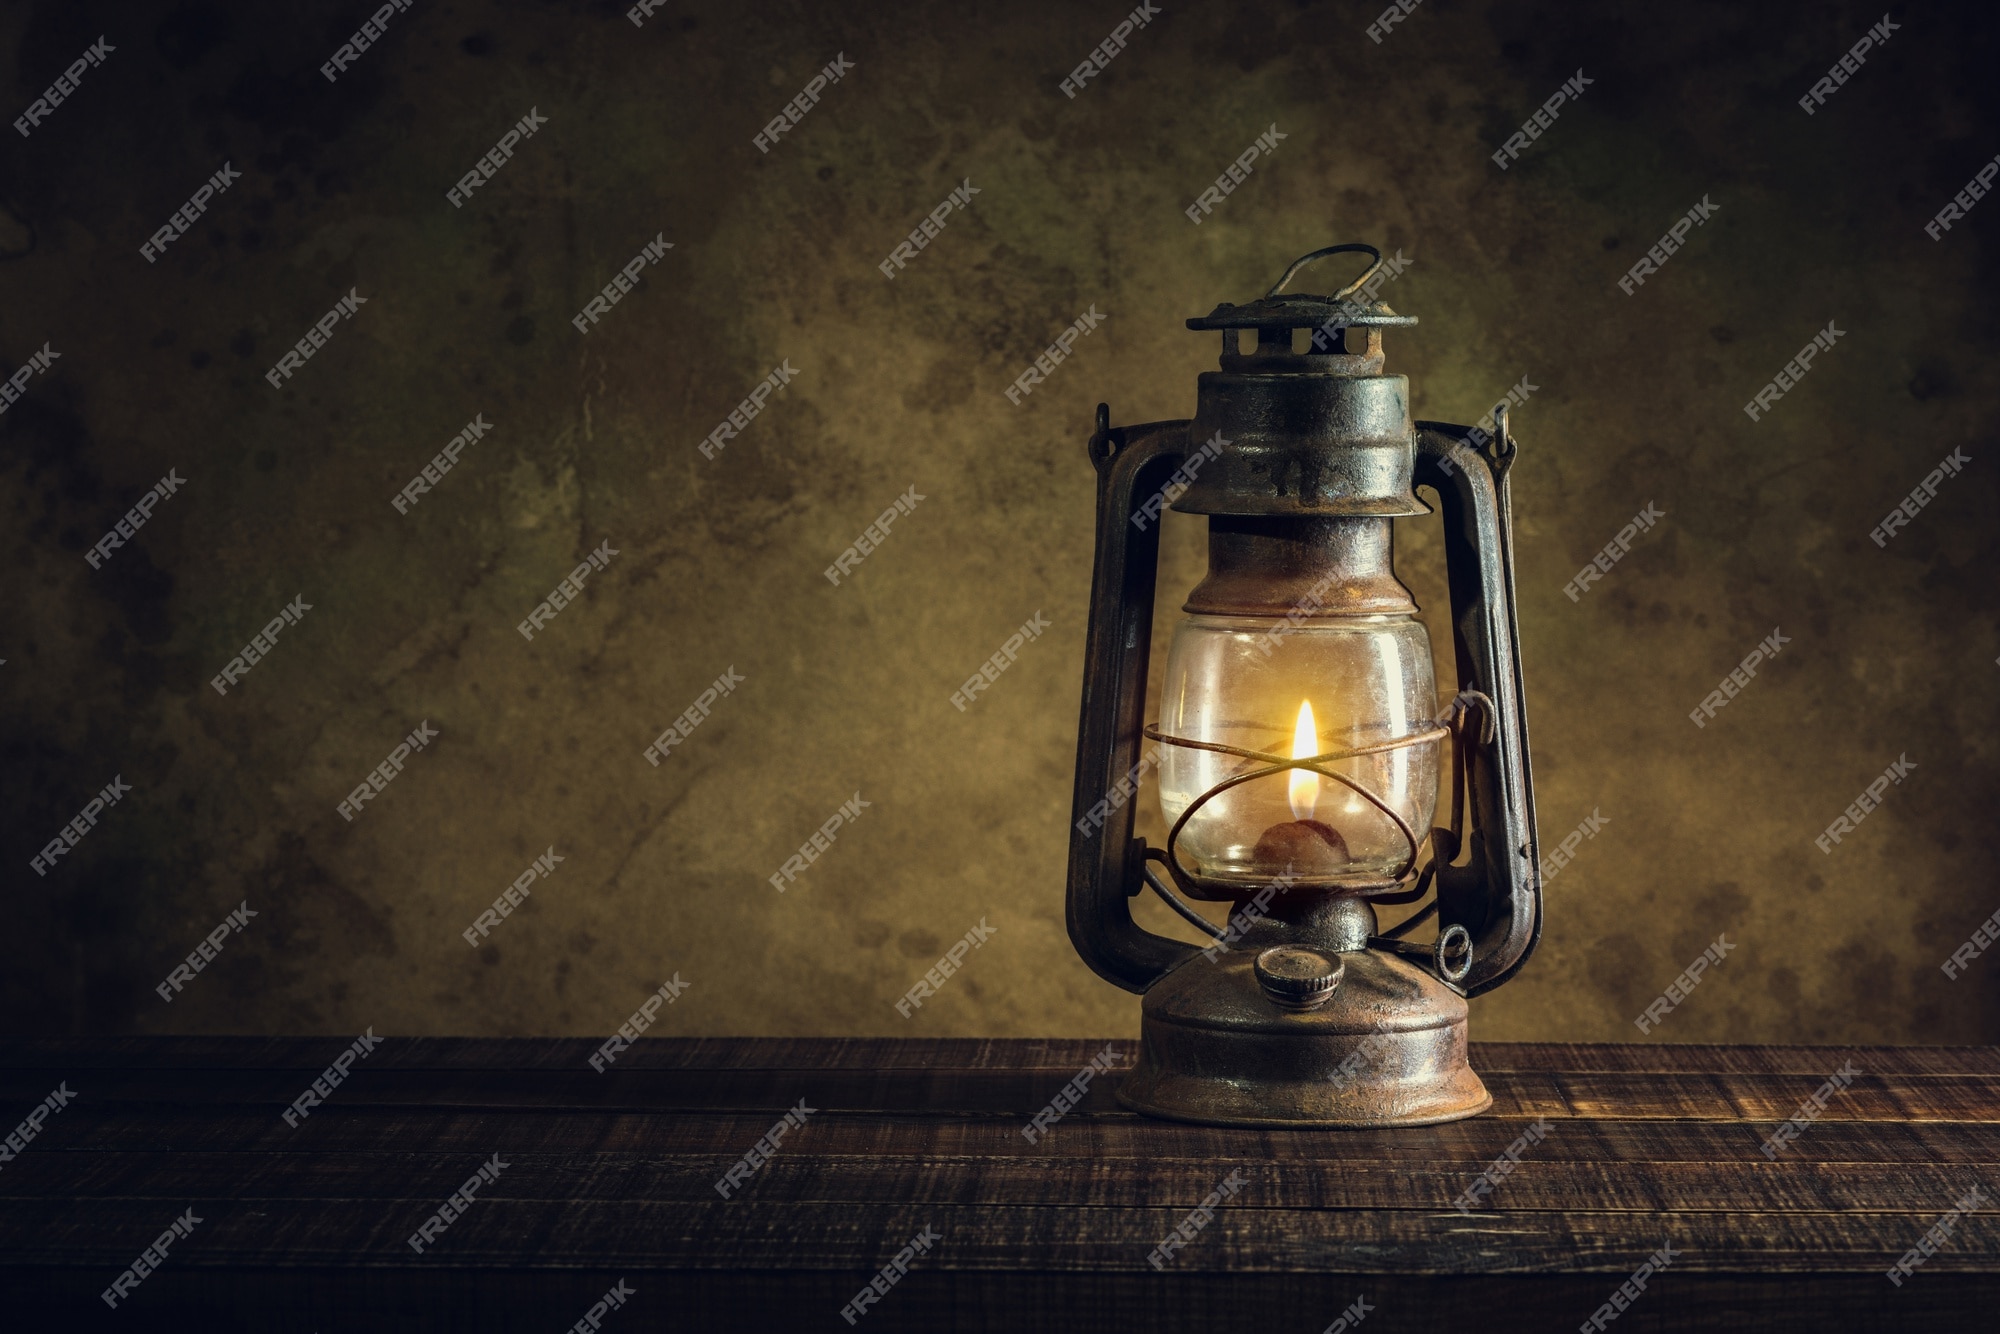 https://img.freepik.com/premium-photo/kerosene-lamp-oil-lantern-burning-with-glow-soft-light-aged-wood-floor_34266-491.jpg?w=2000